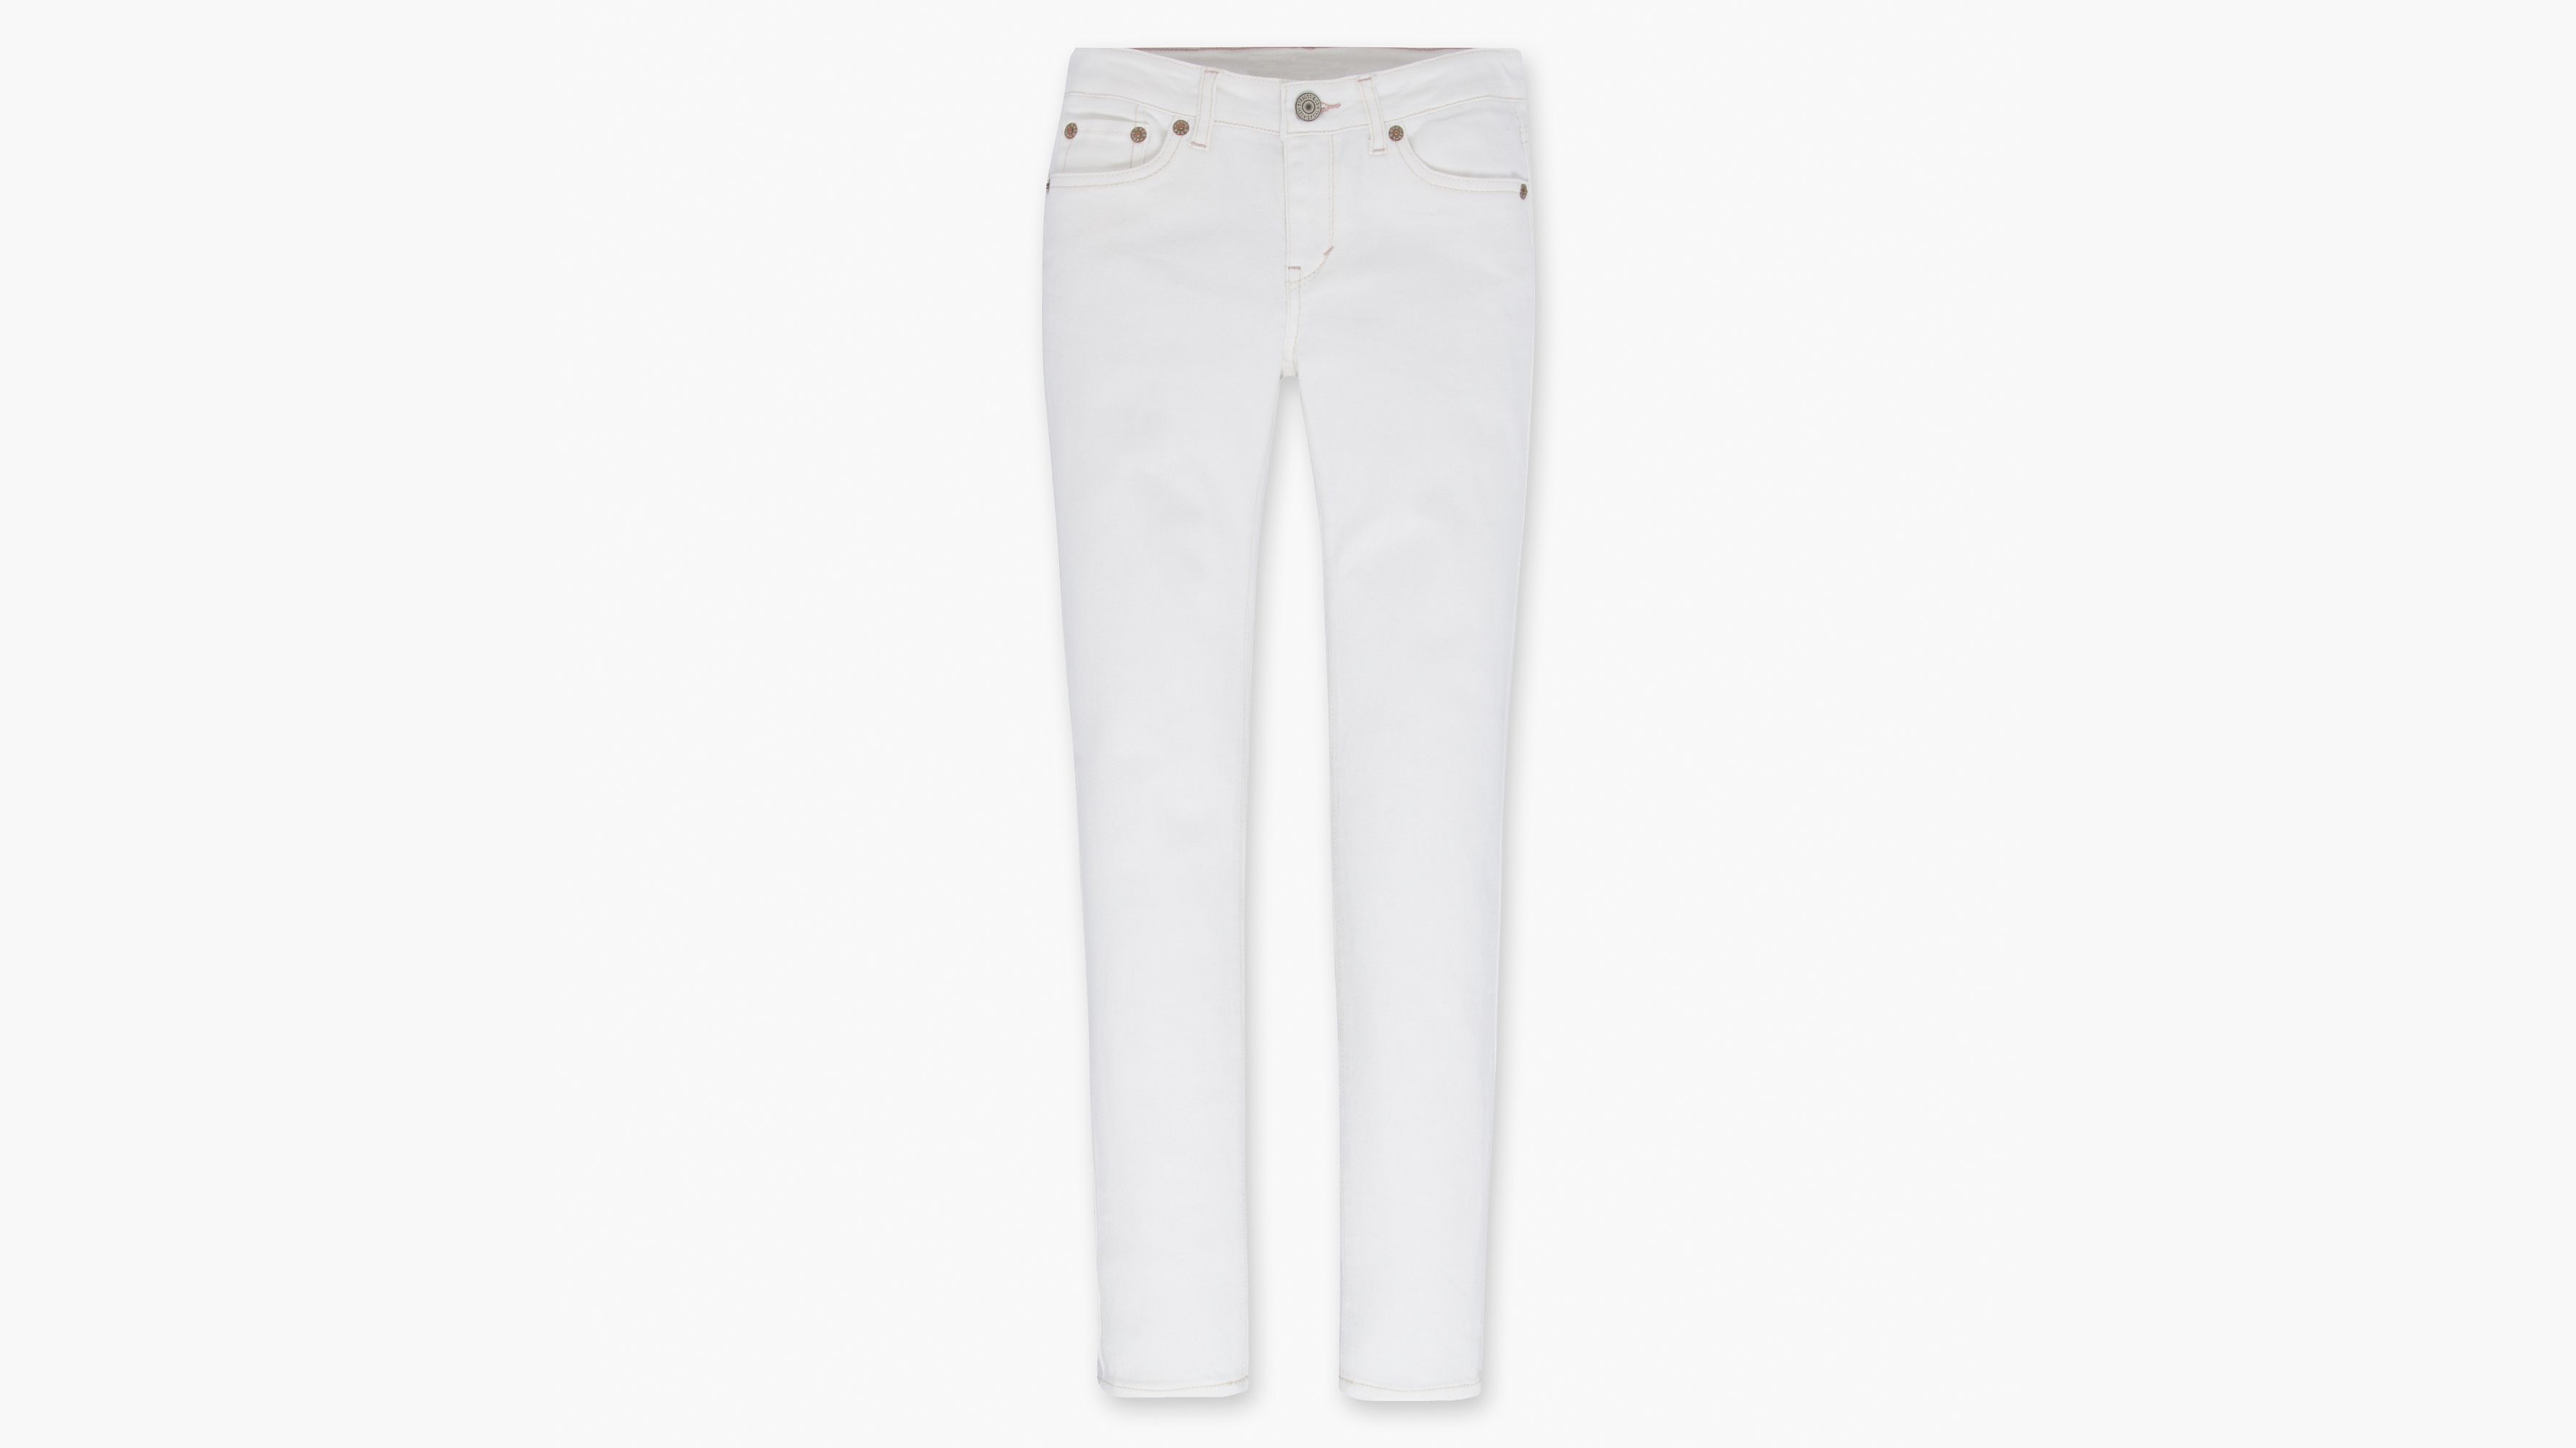 white levi skinny jeans